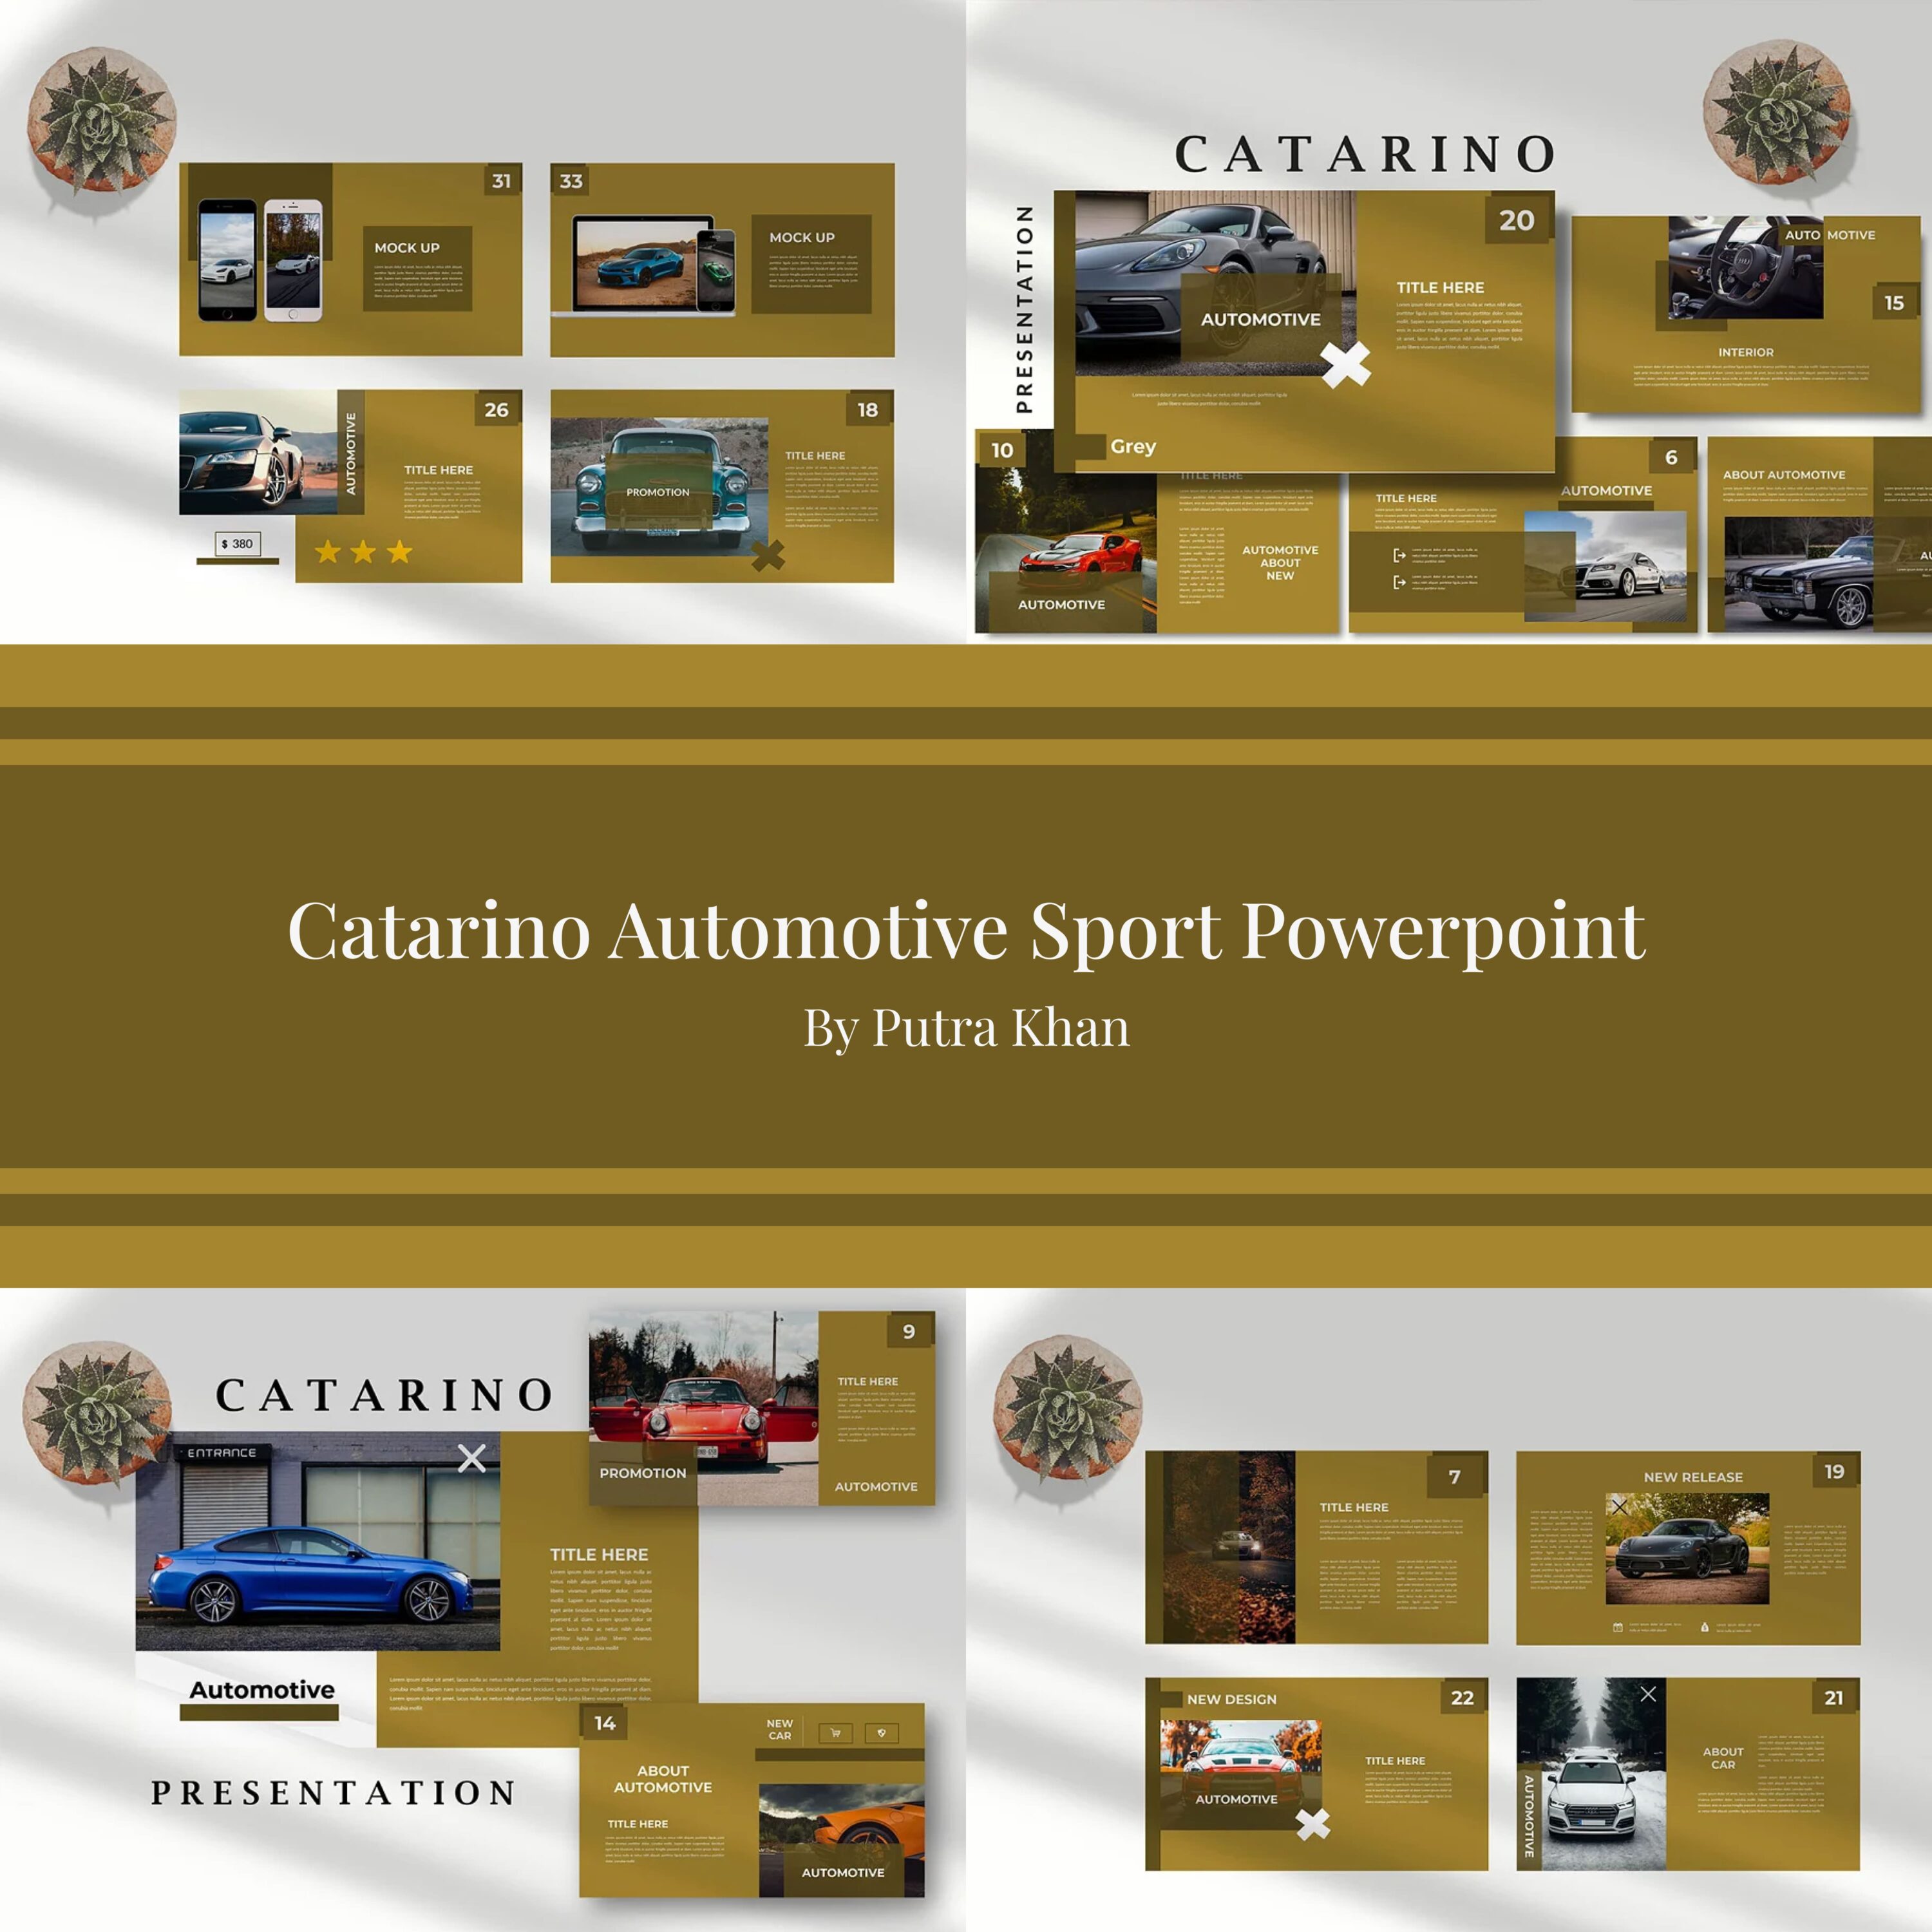 Catarino Automotive Sport Powerpoint.